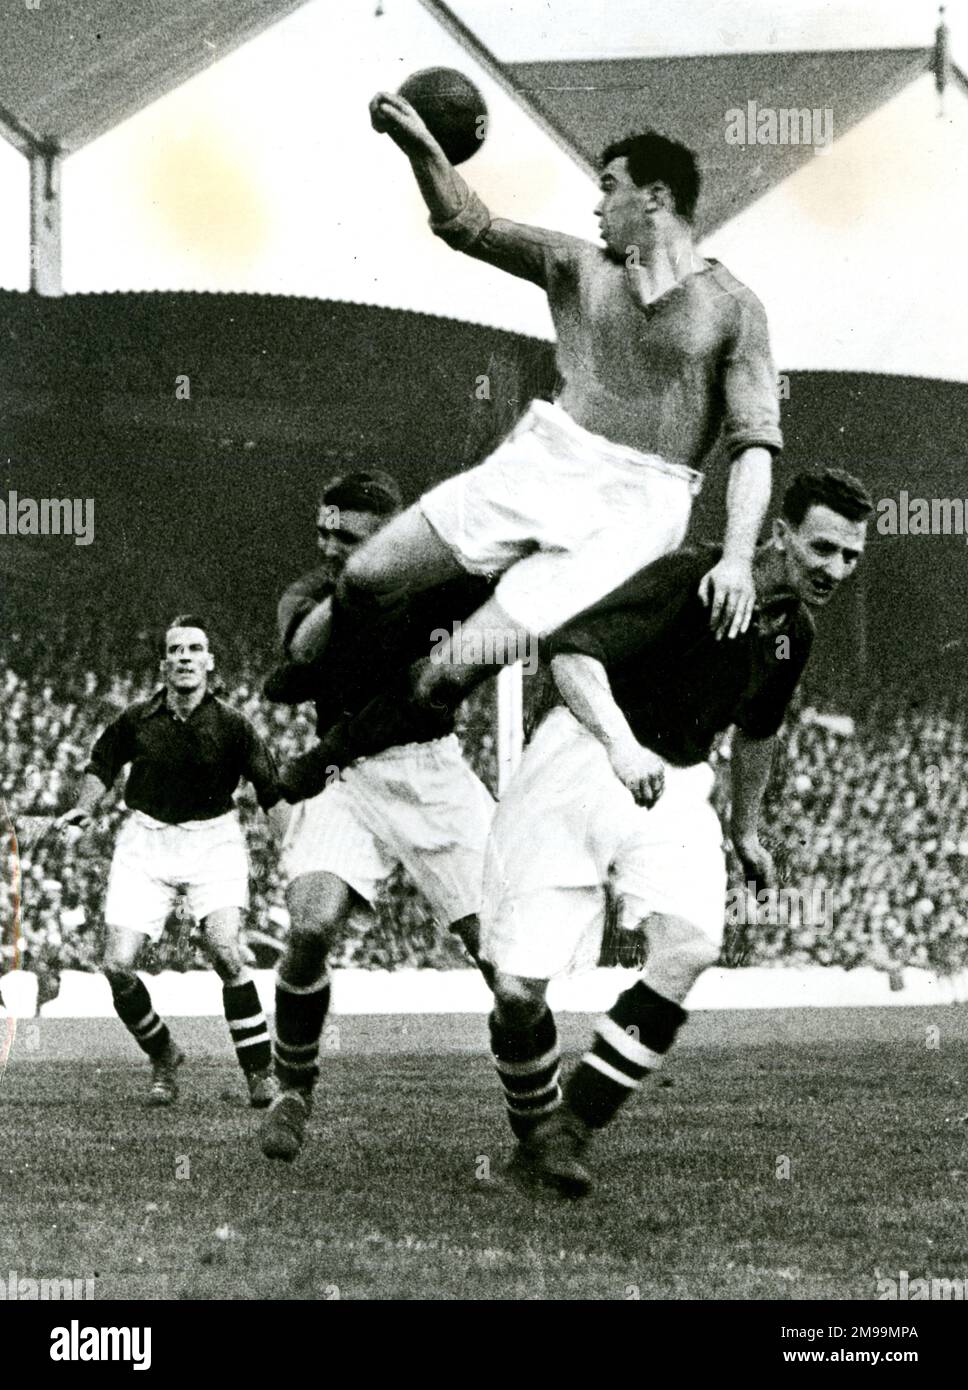 Eddie Hapgood e Herbie Roberts of Arsenal, Dixie Dean of Everton Heading, in una partita di calcio sparata. Foto Stock